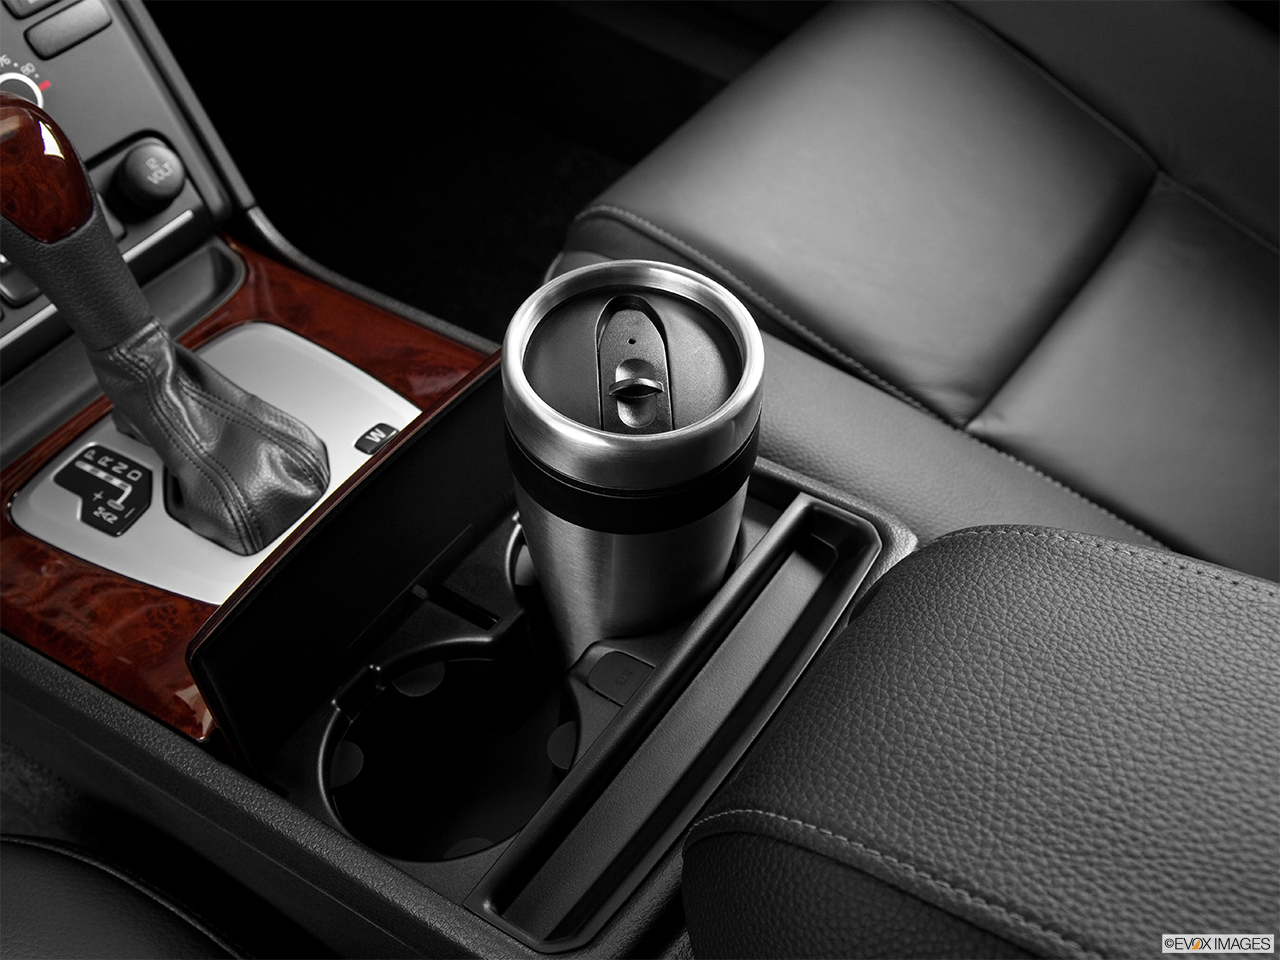 2014 Volvo XC90 3.2 FWD Premier Plus Cup holder prop (primary). 